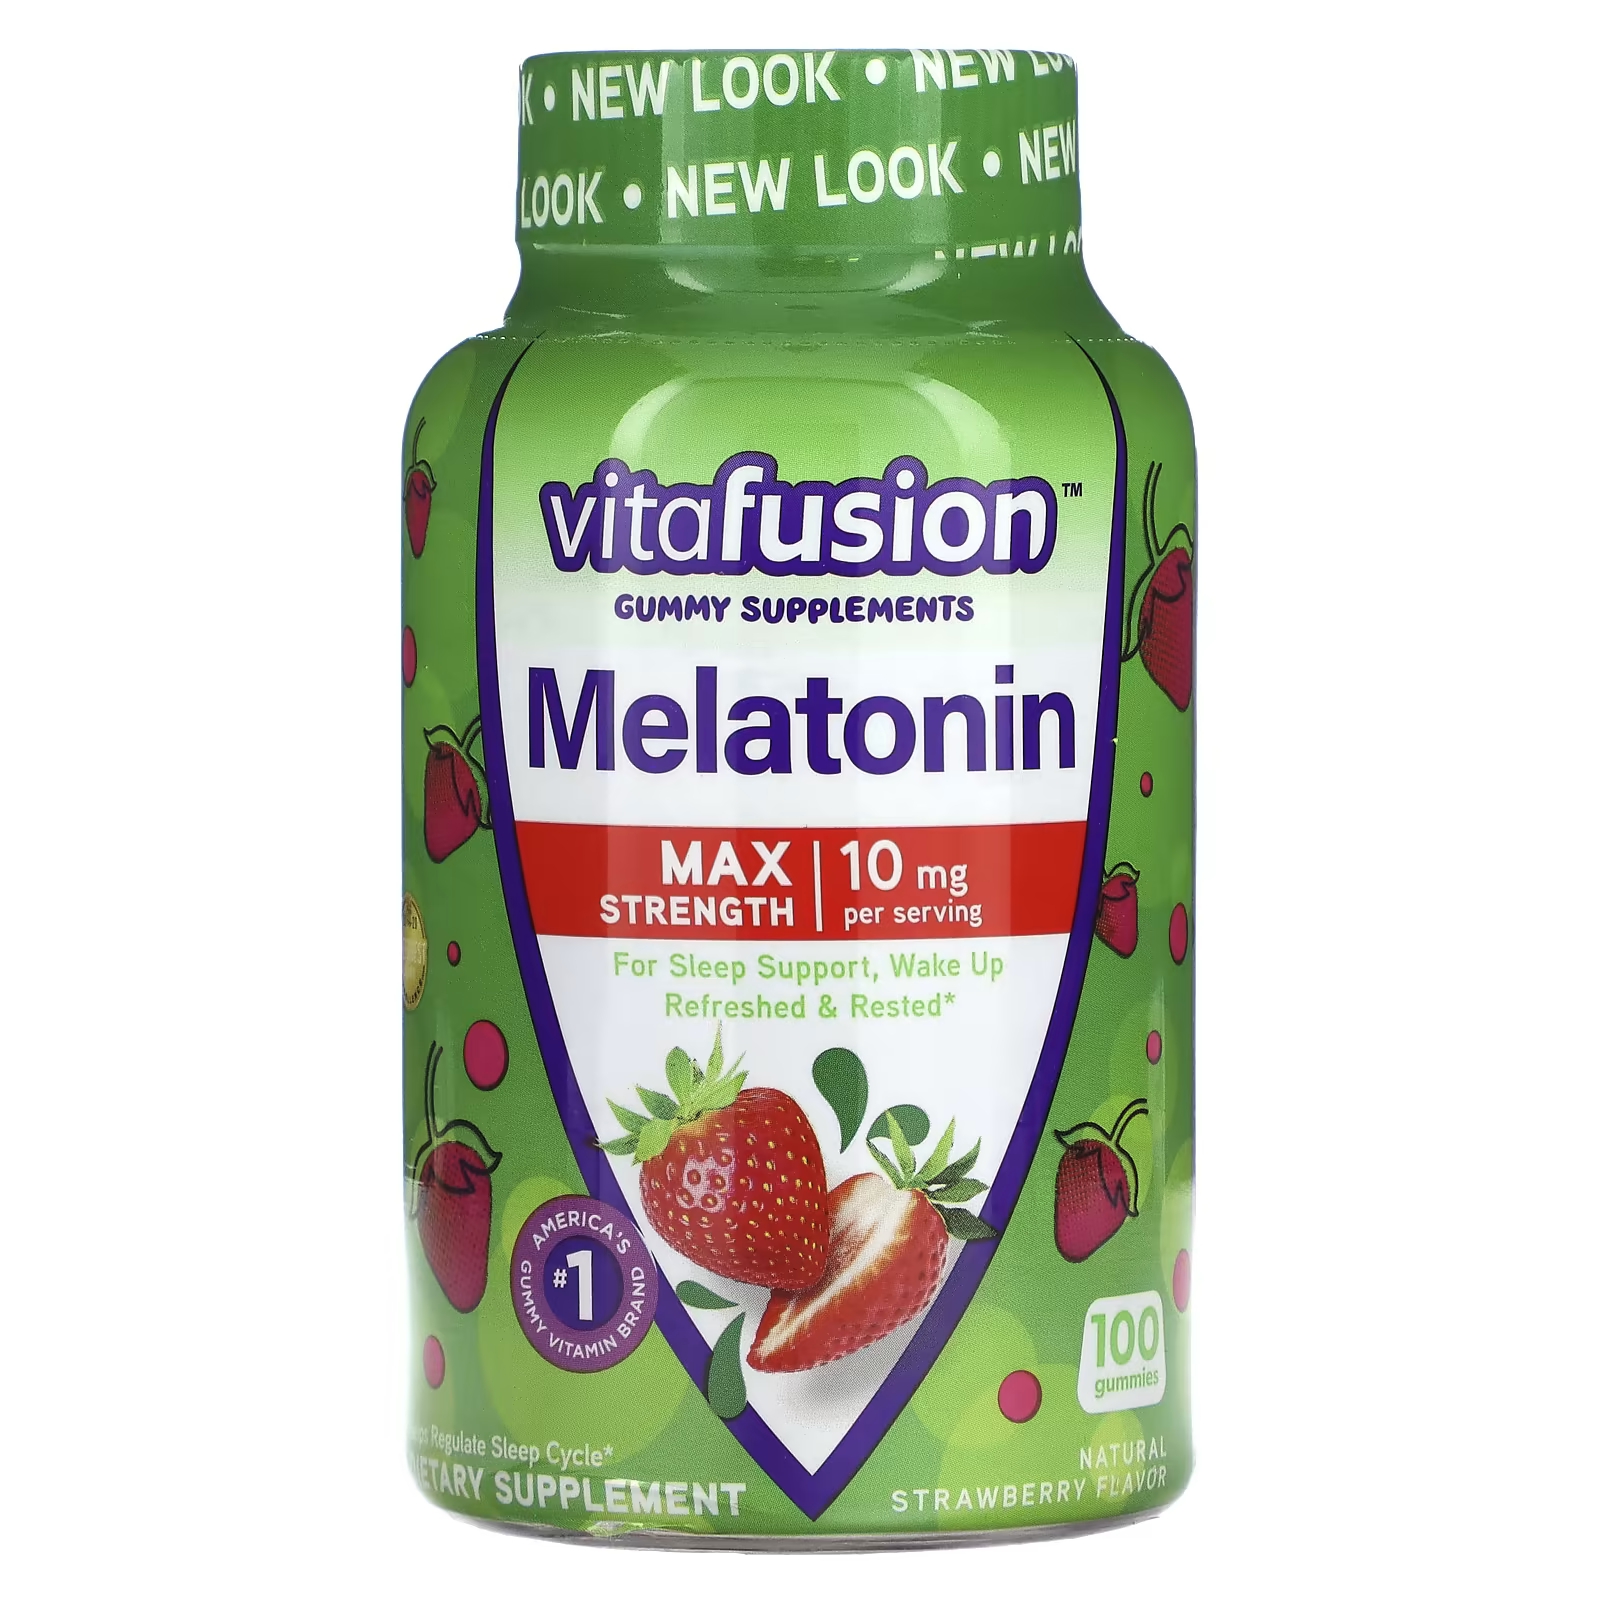 VitaFusion Max Strength Мелатонин Натуральная клубника 10 мг 100 жевательных таблеток (5 мг на жевательную конфету)